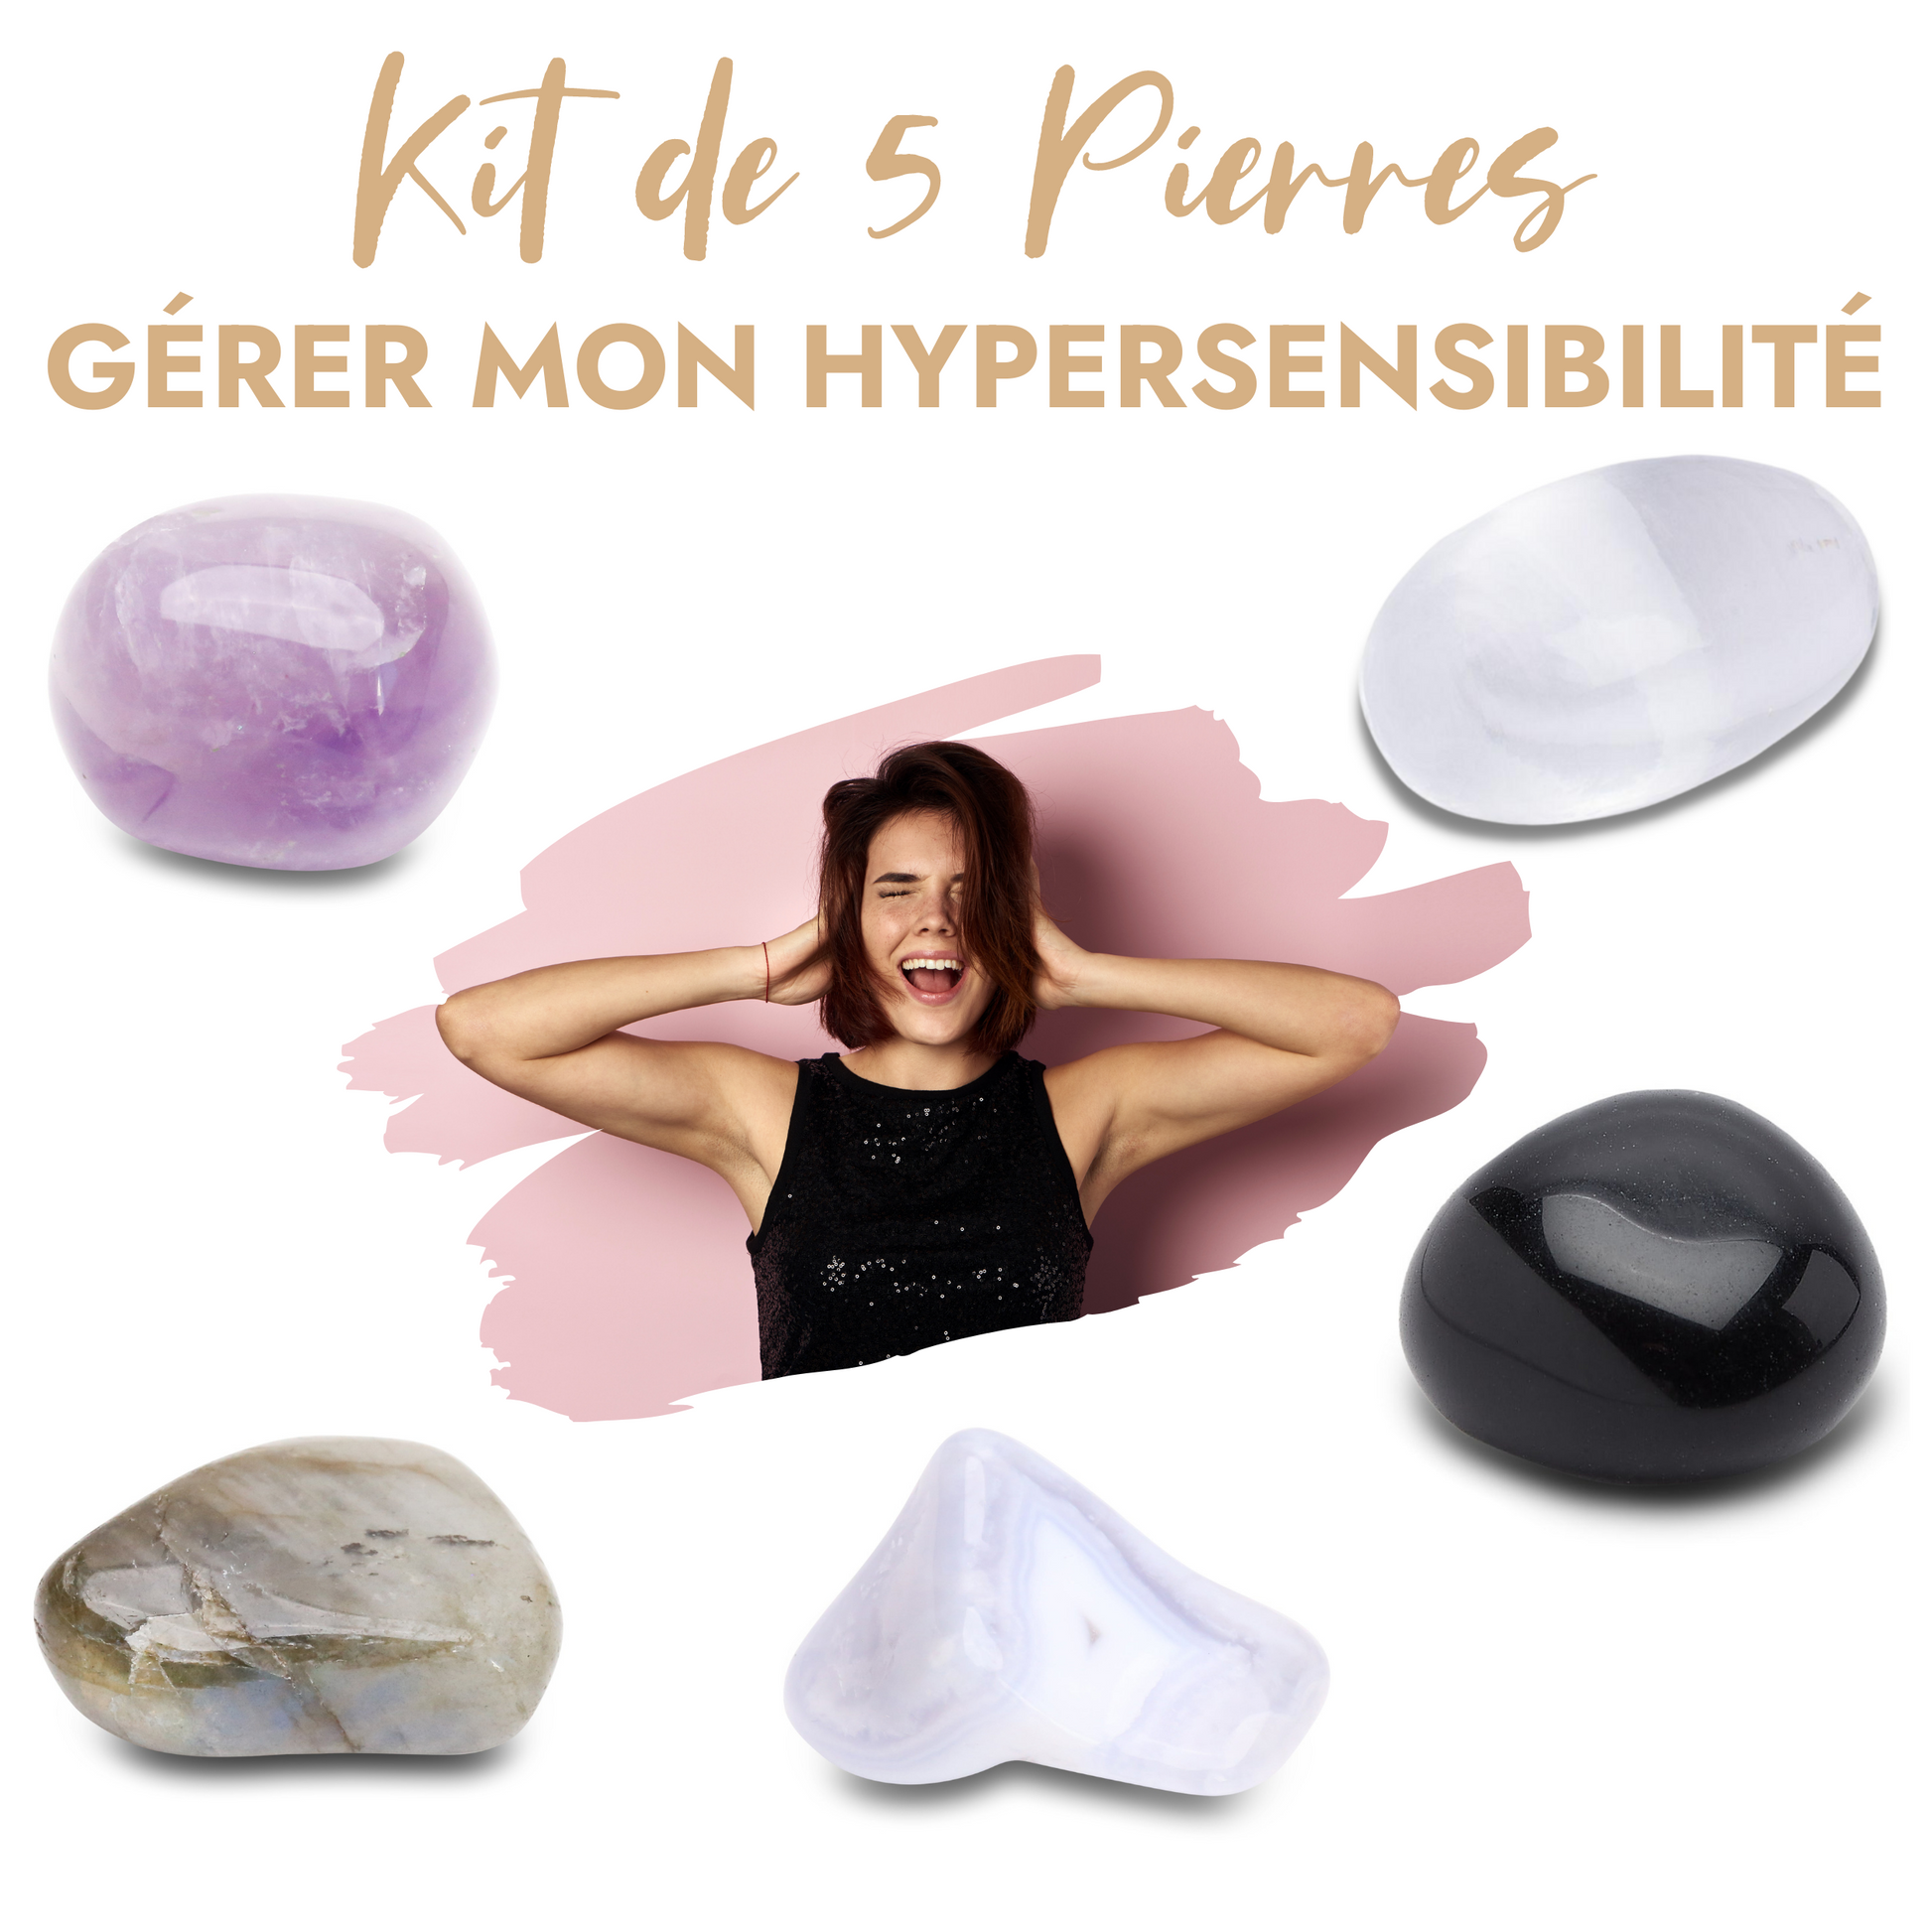 Kit de 5 pierres “Gérer mon Hypersensibilité” - Karma Yoga Shop